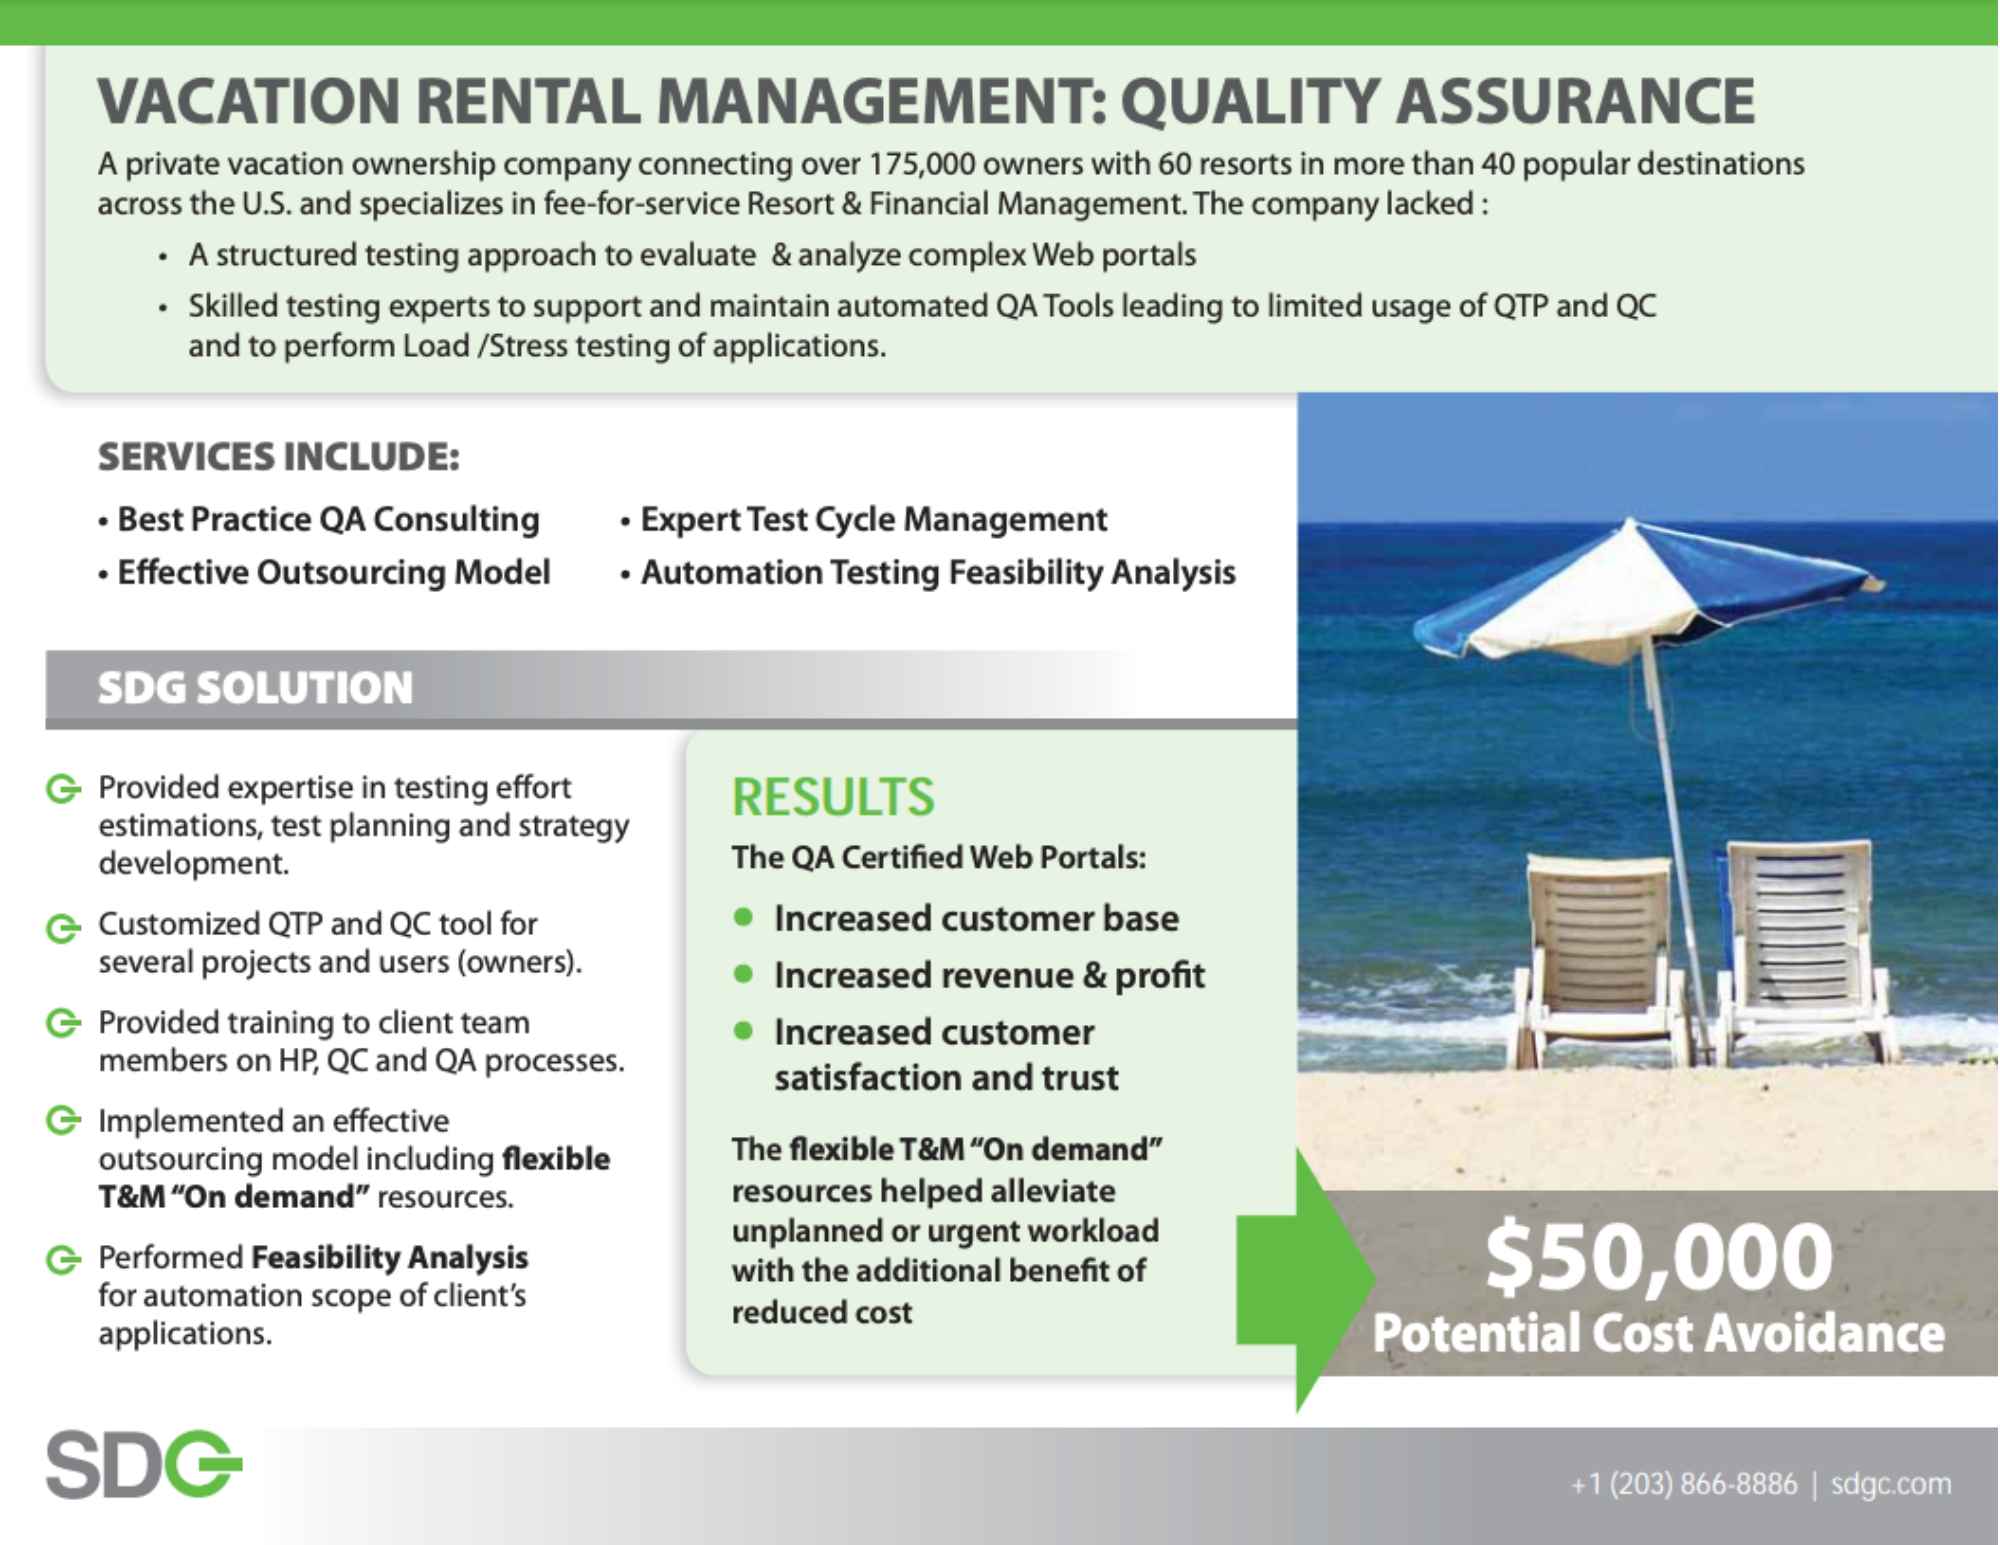 Vacation Rental Management Case Study Image